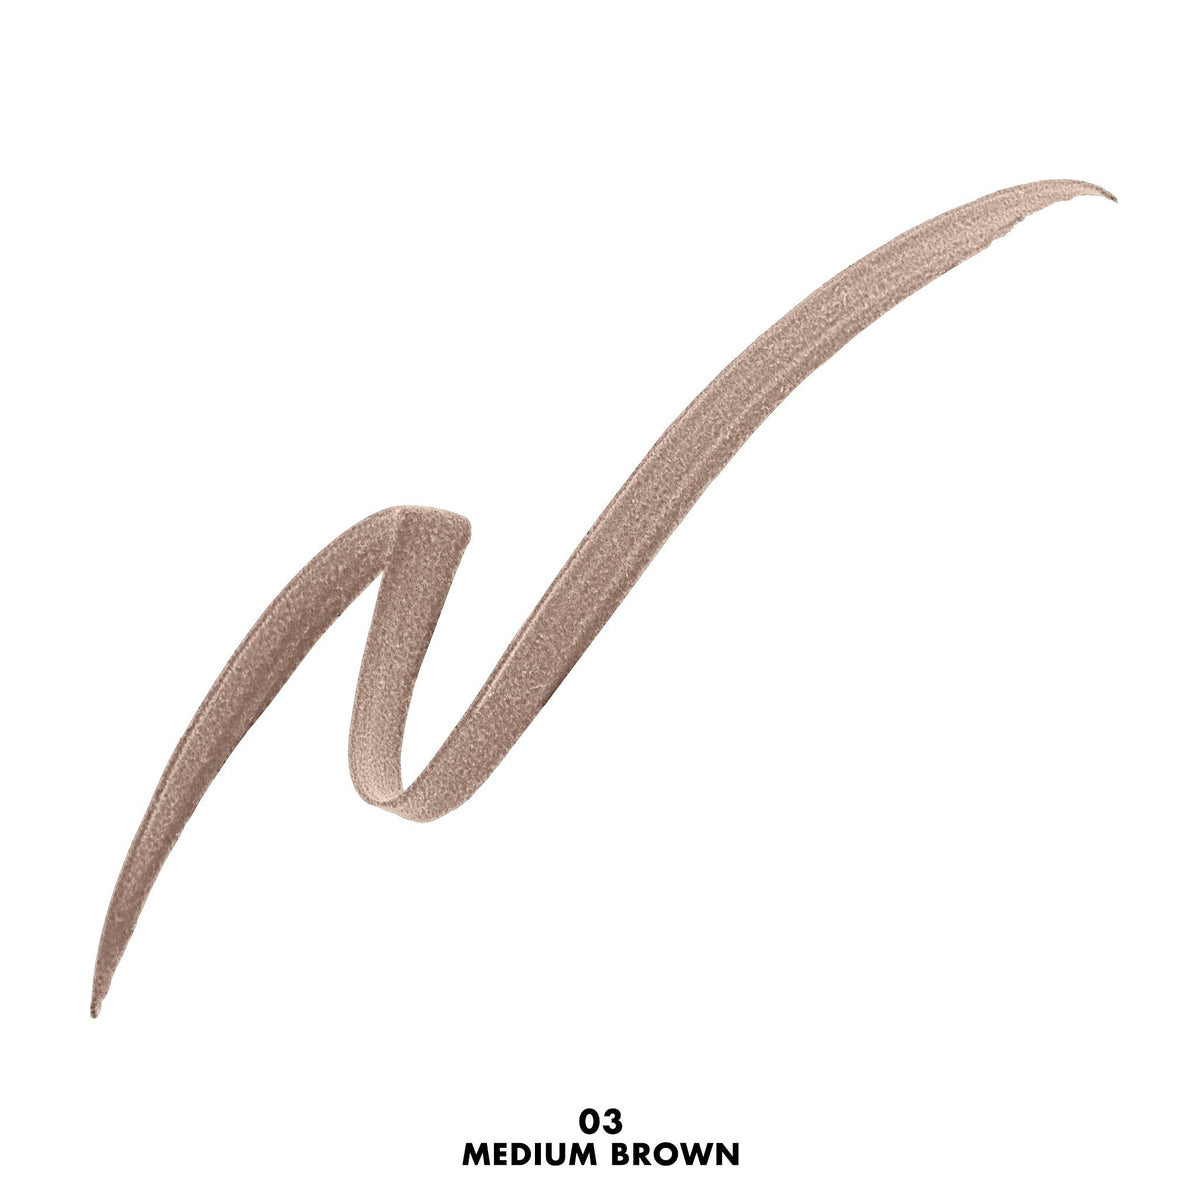 MILANI Stay Put Brow Color - Medium Brown #03